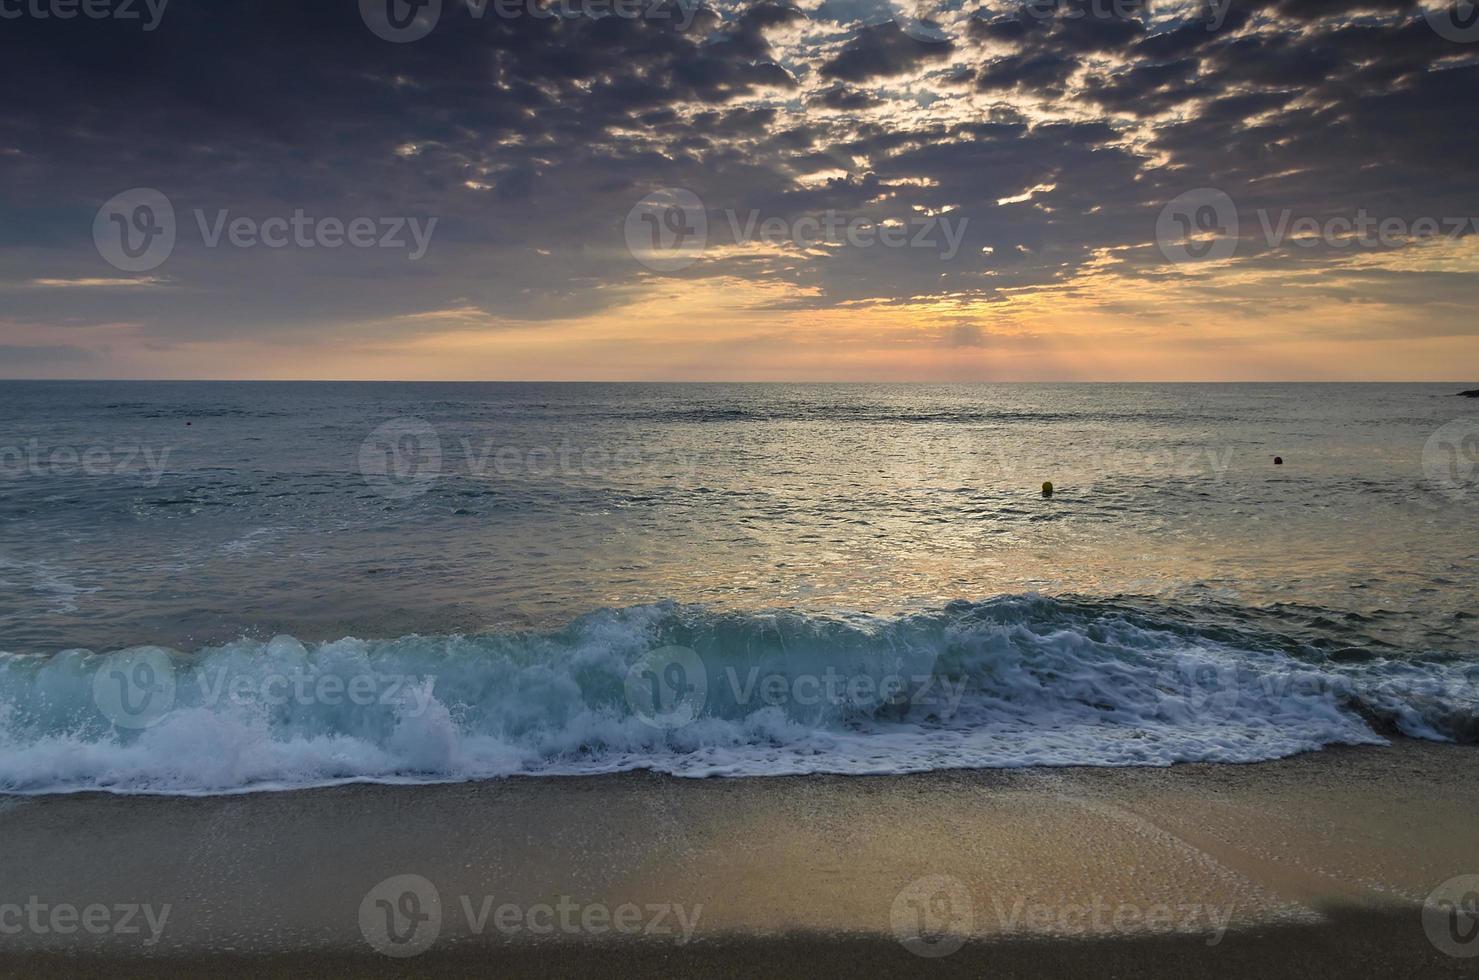 Eternity on Bulgarian sandy shore near sunrise meditation photo